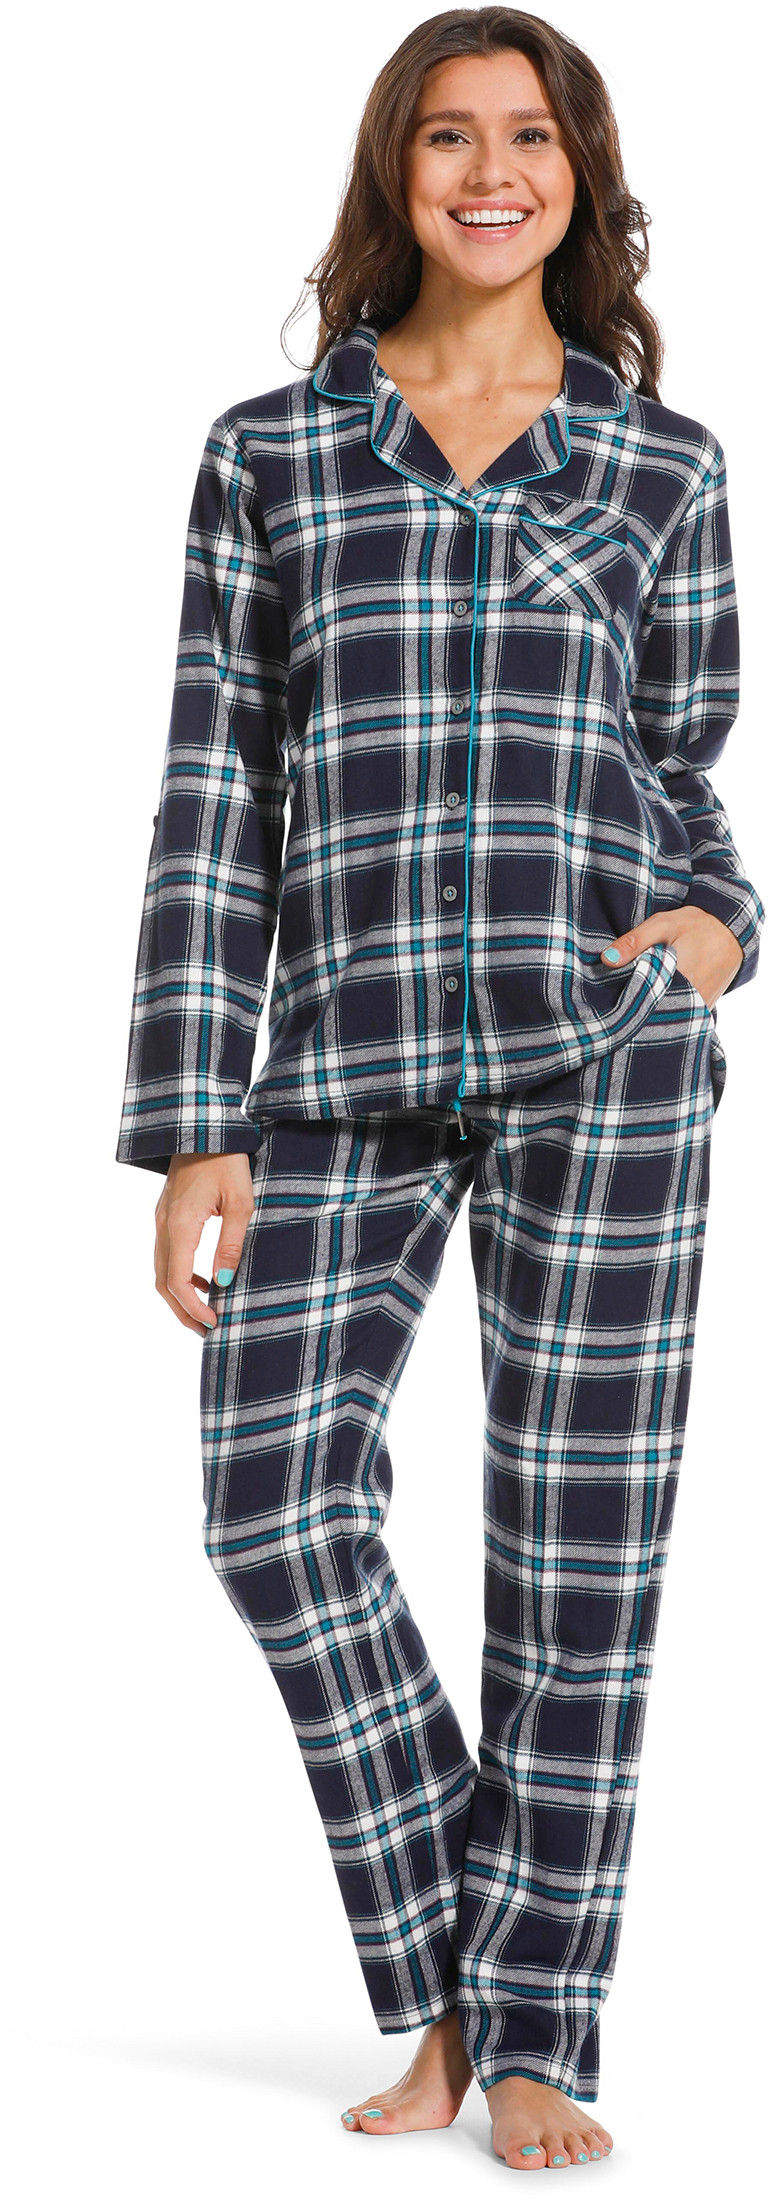 Rebelle dames pyjama flanel 21222-408-6-48